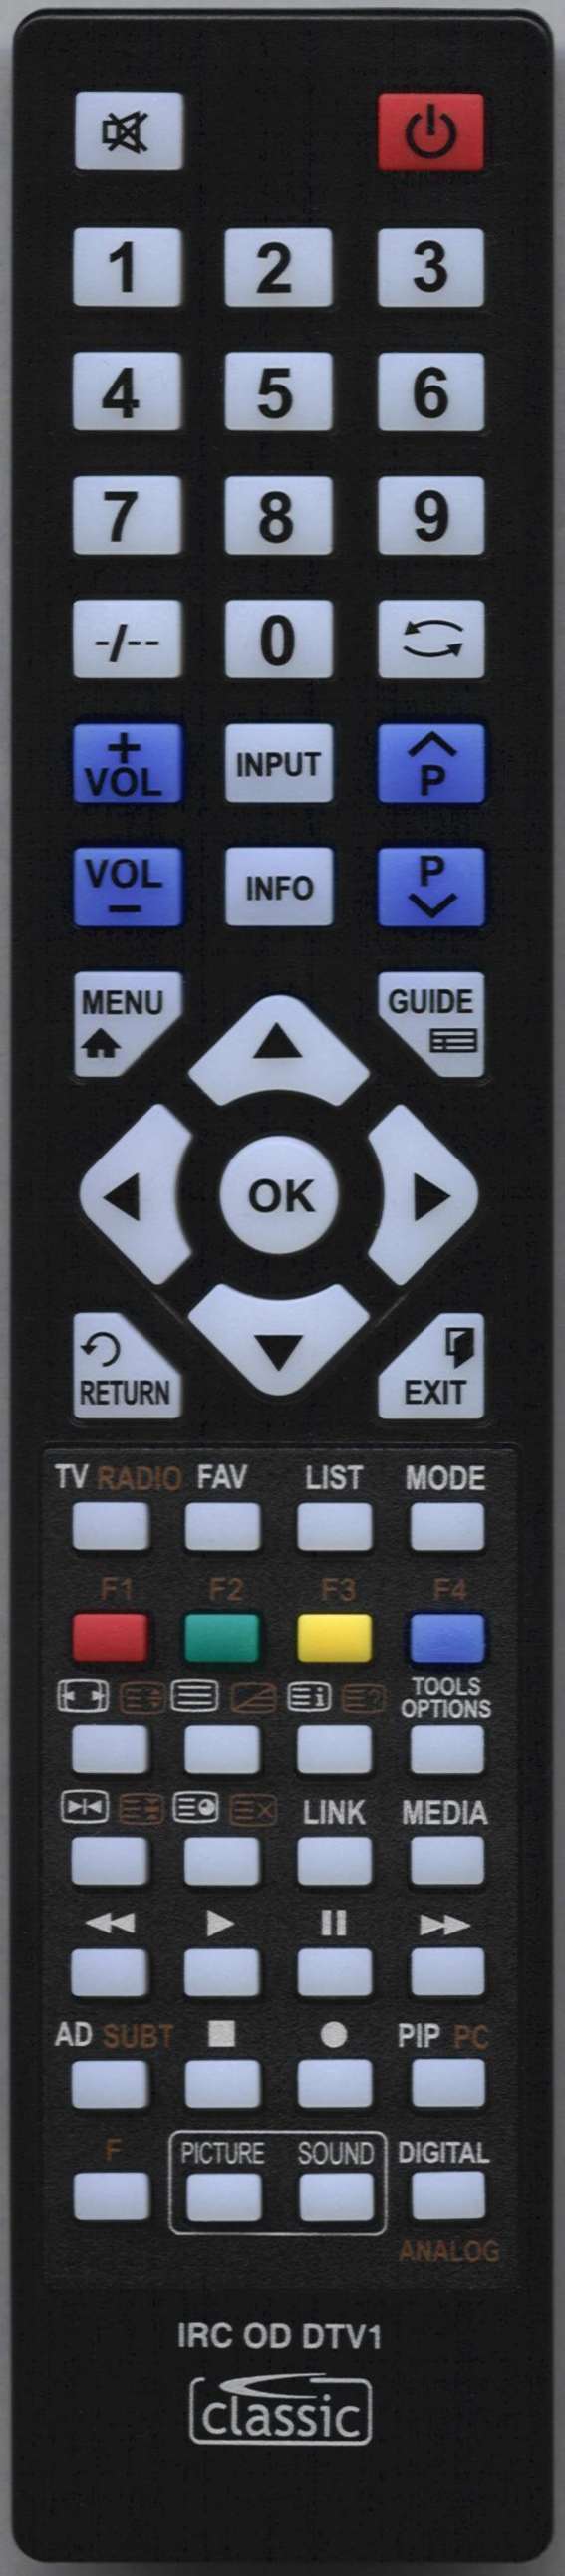 Kenmark LVD163D Remote Control